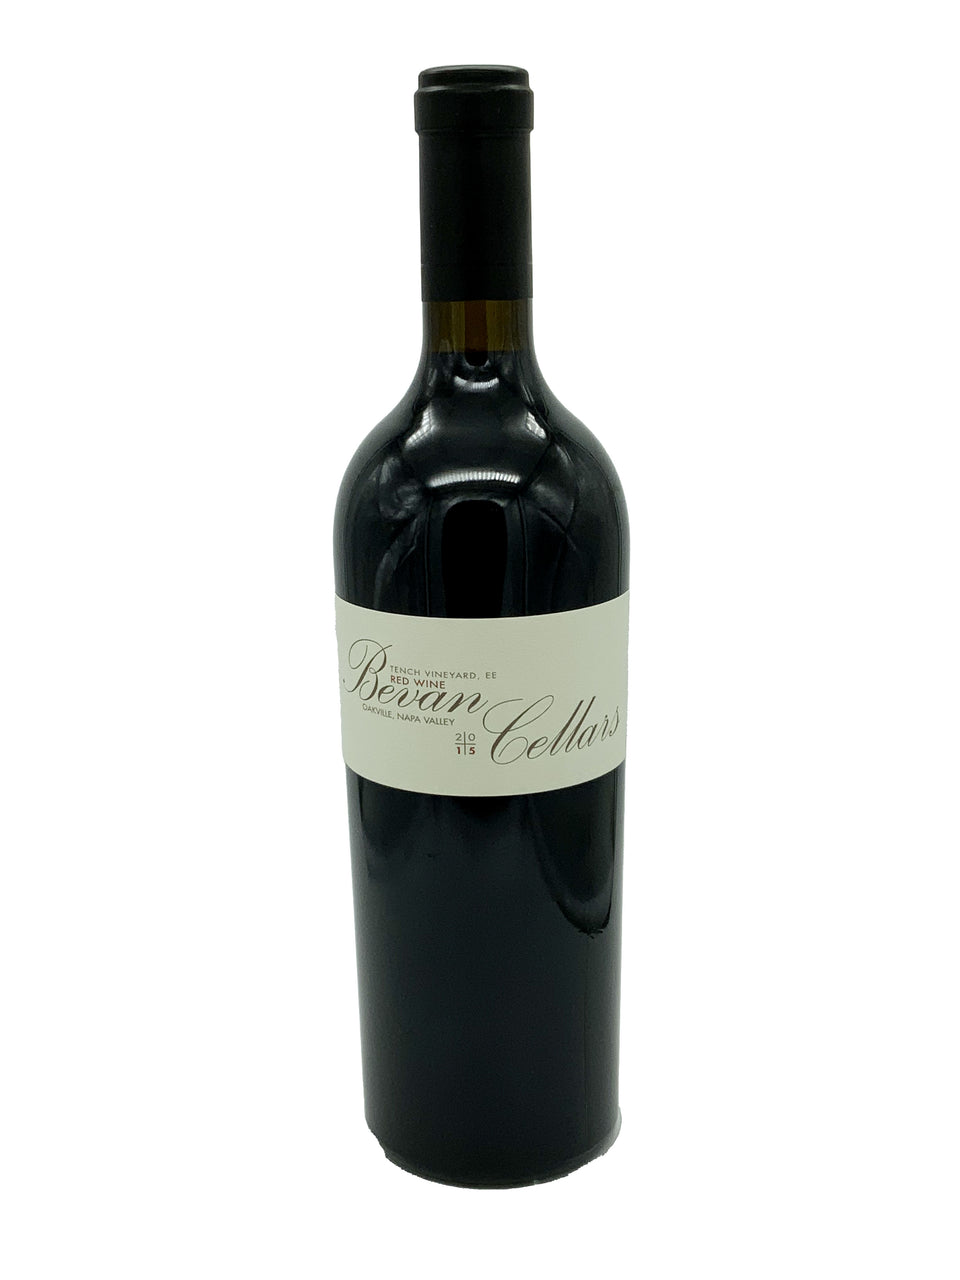 Bevan Cellars EE "Double E" Proprietary Red, Tench Vineyard 2015